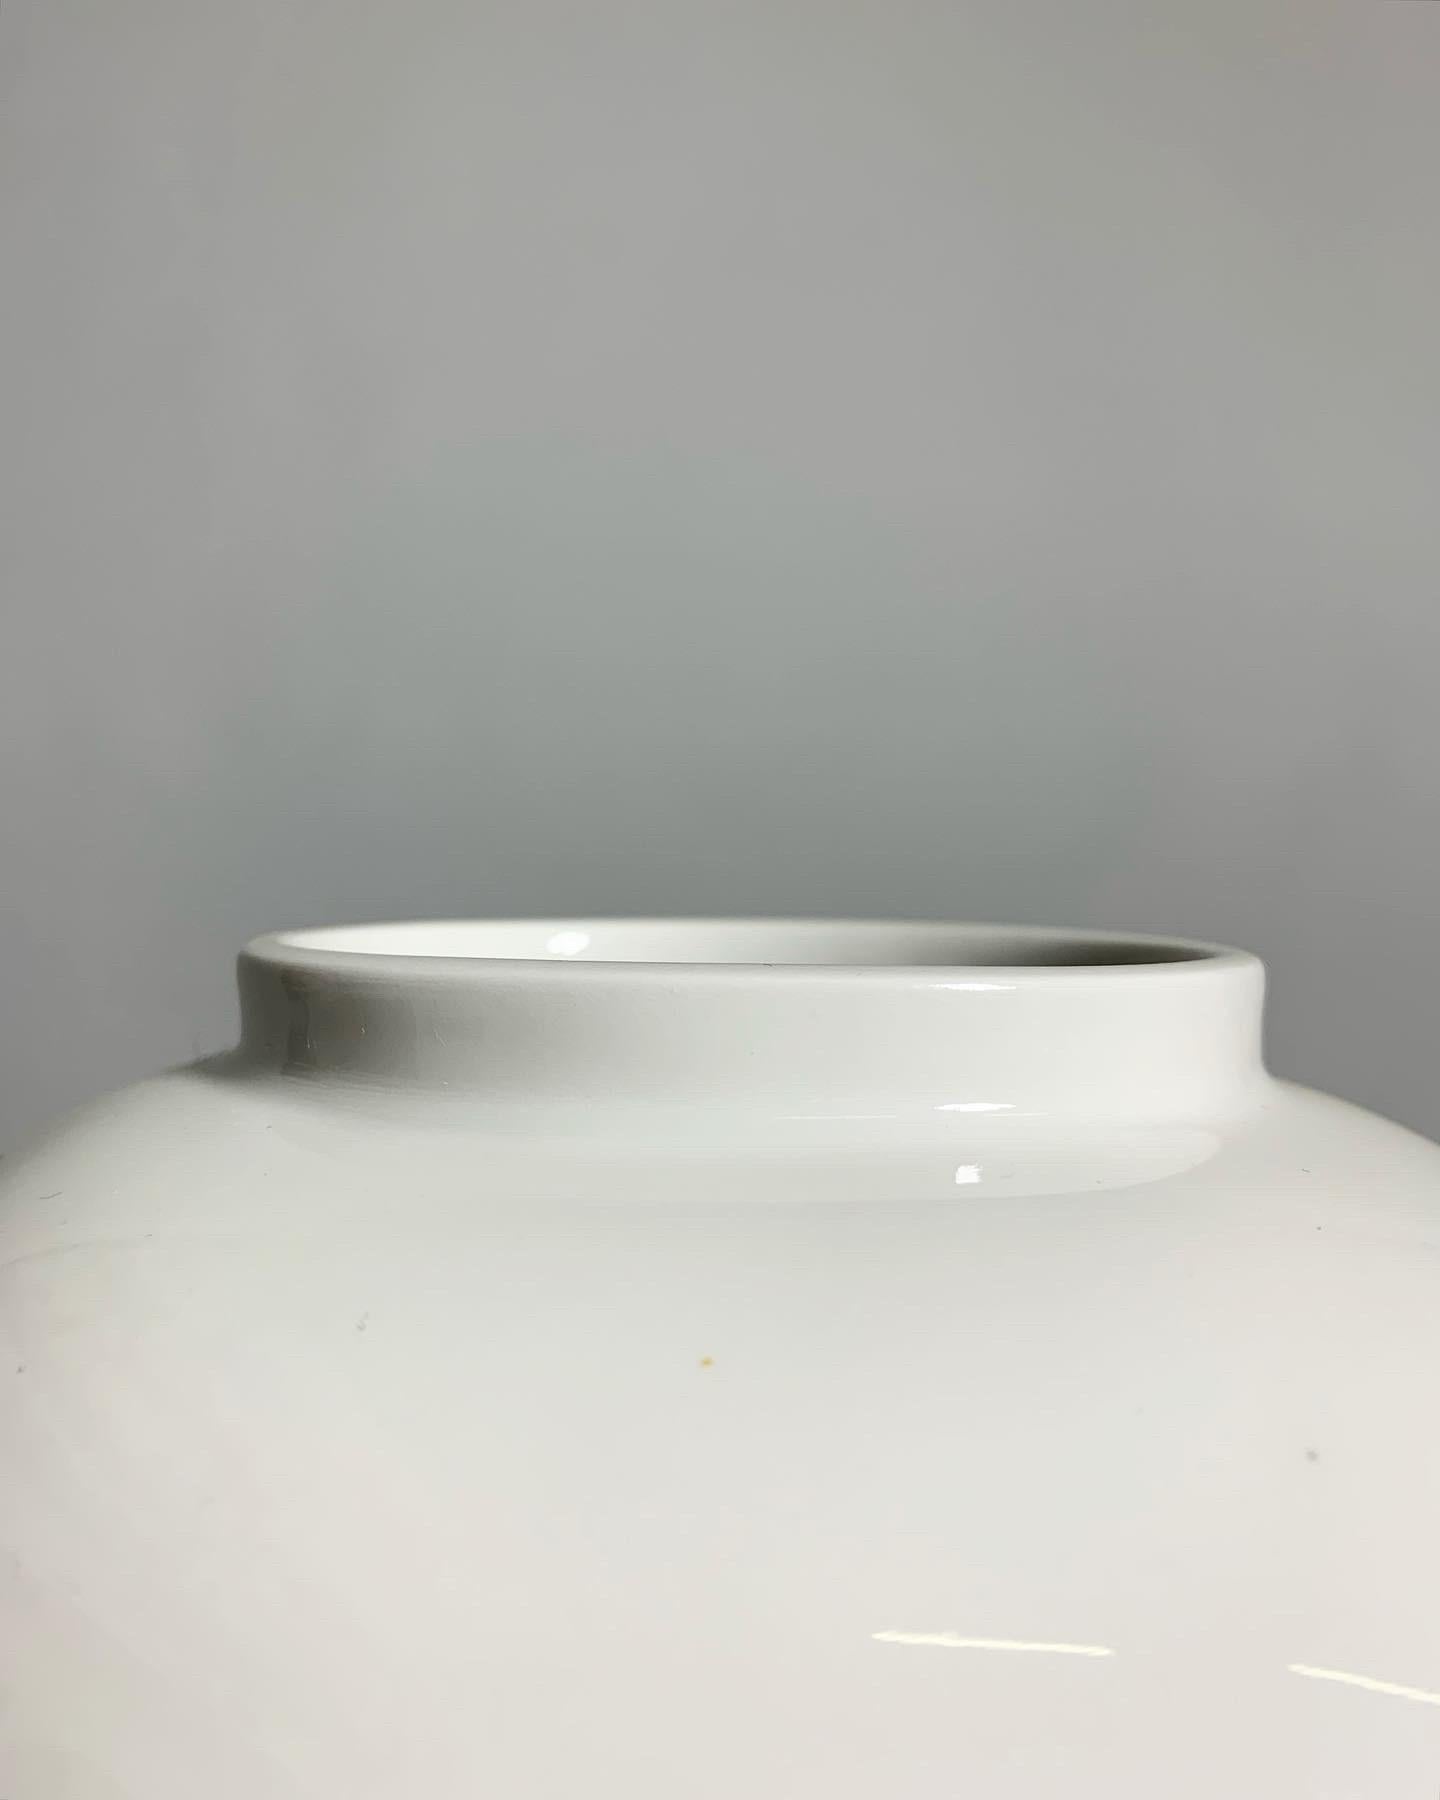 Trude Petri Heart Shaped Porcelain Vase KPM Berlin 1930s Bauhaus Design 3